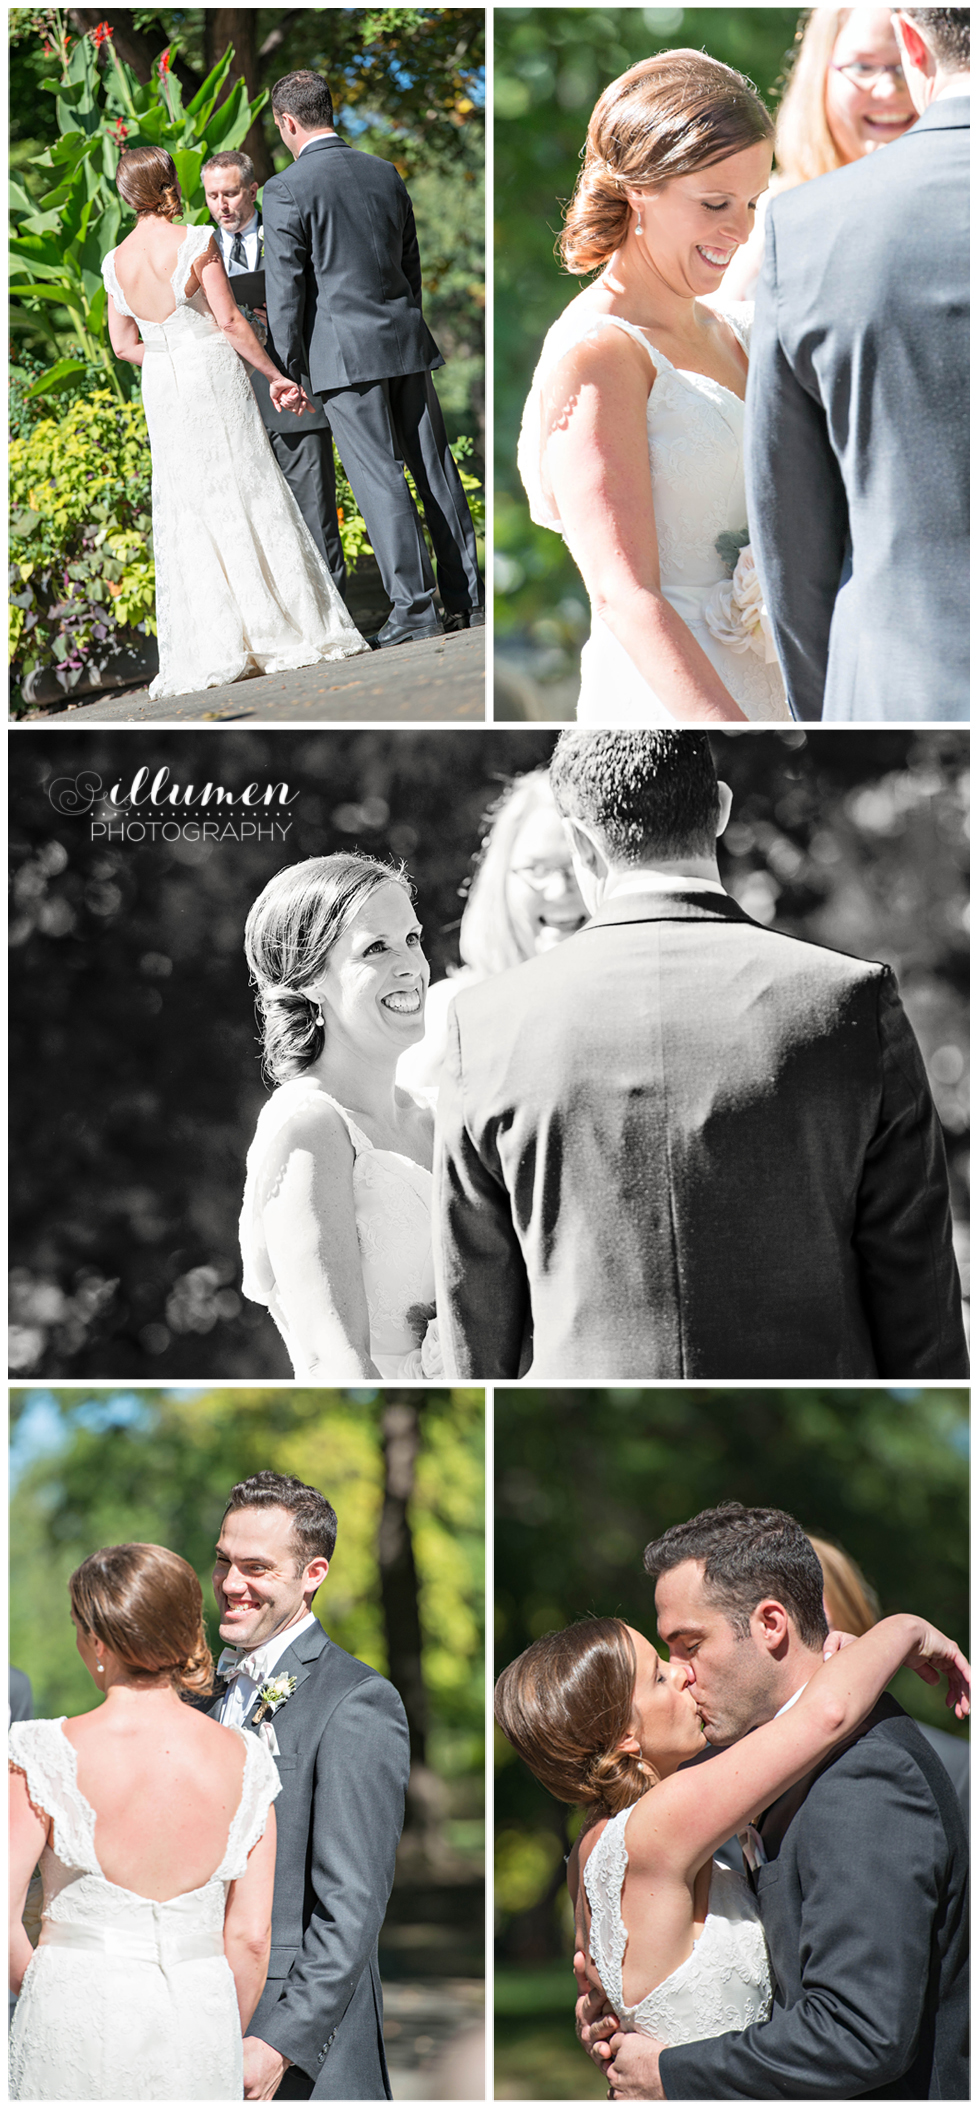 St. Louis Wedding Photography; www.illumenphotography.com; Illumen Photography